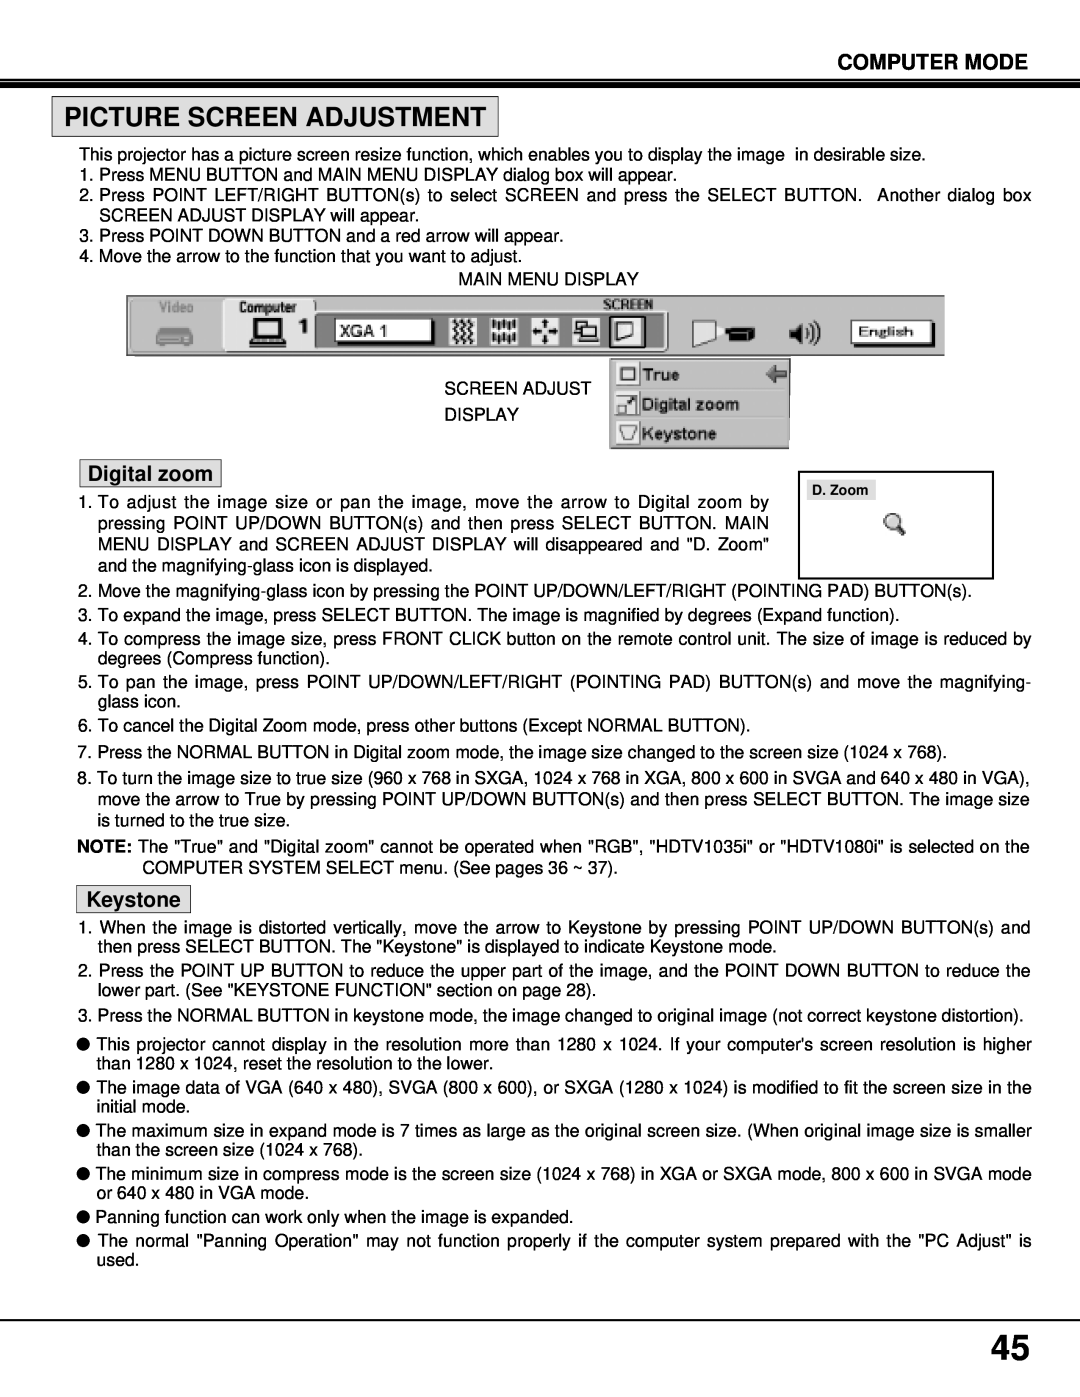 BOXLIGHT MP-37t manual Picture Screen Adjustment, Computer Mode, Digital zoom, Keystone 